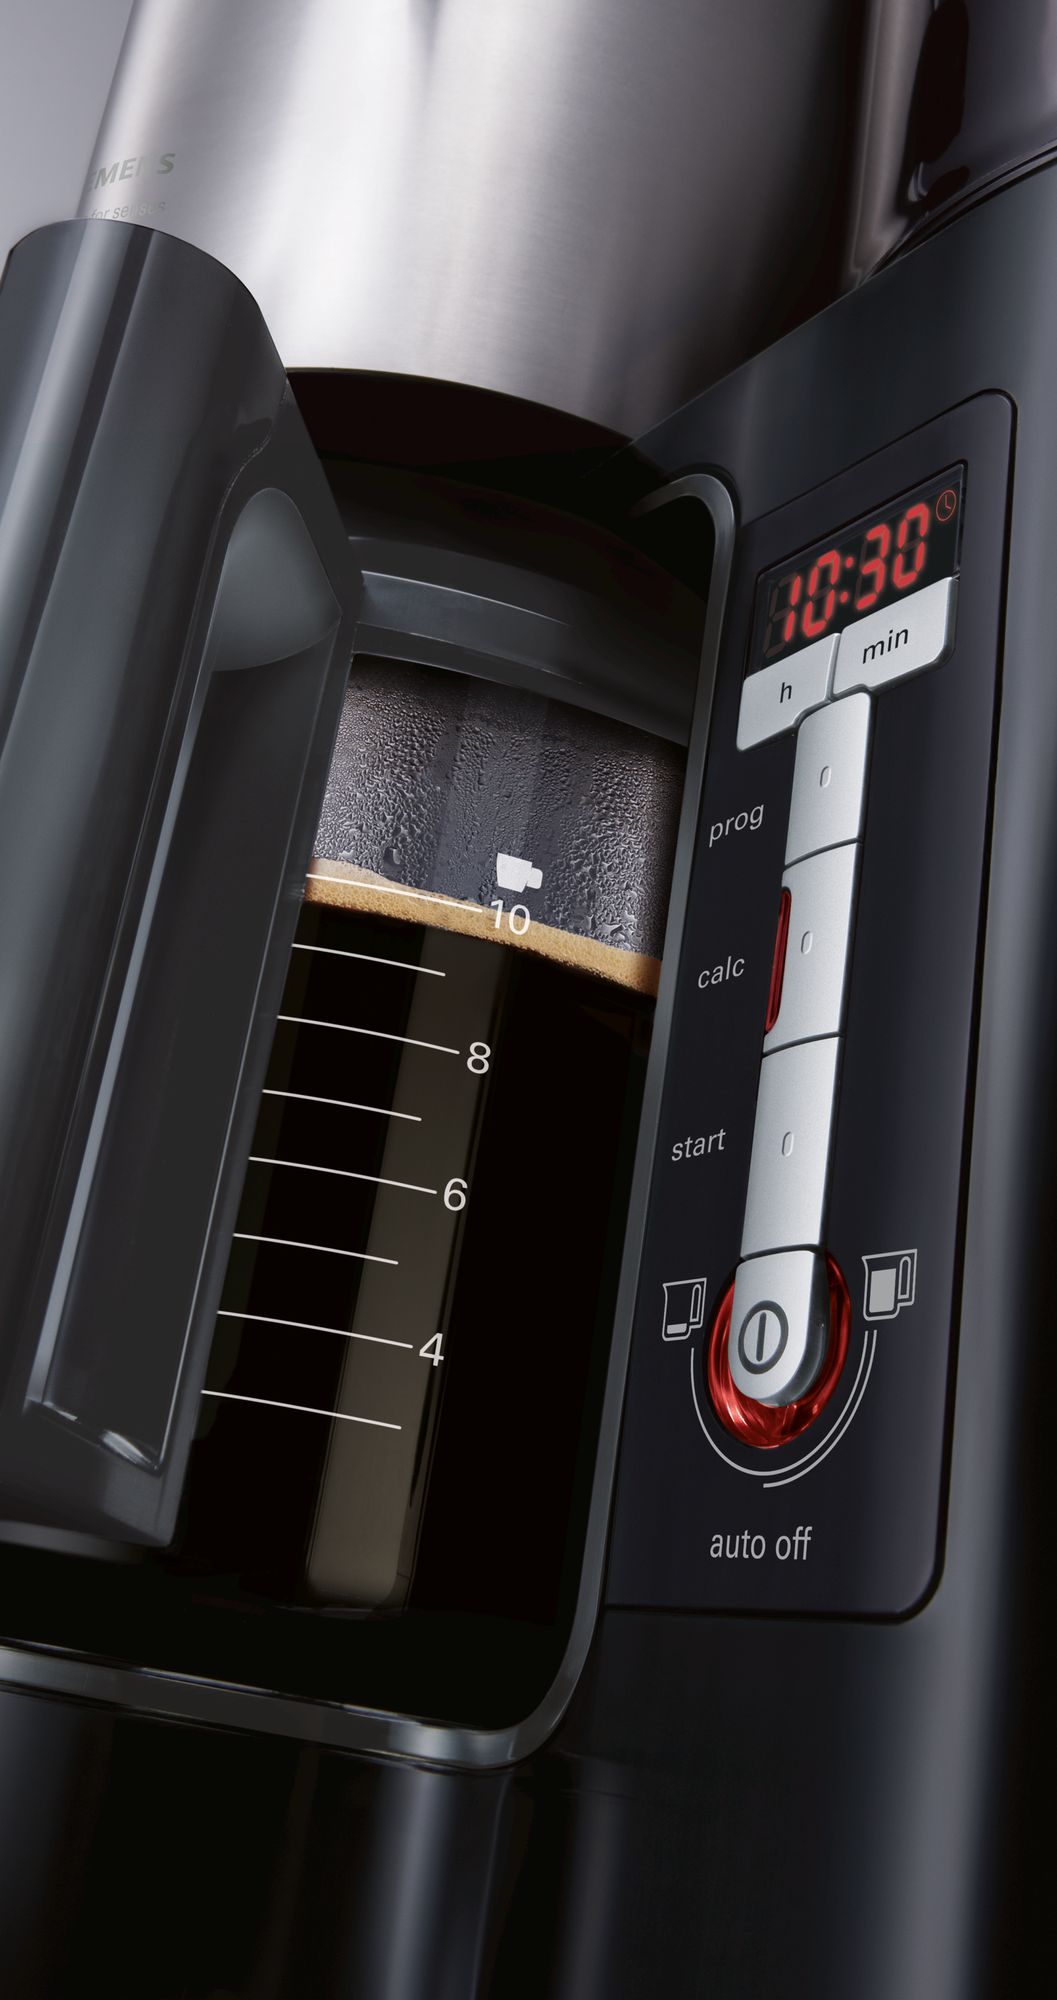 Filtre Kahve Makinesi sensor for senses siyah